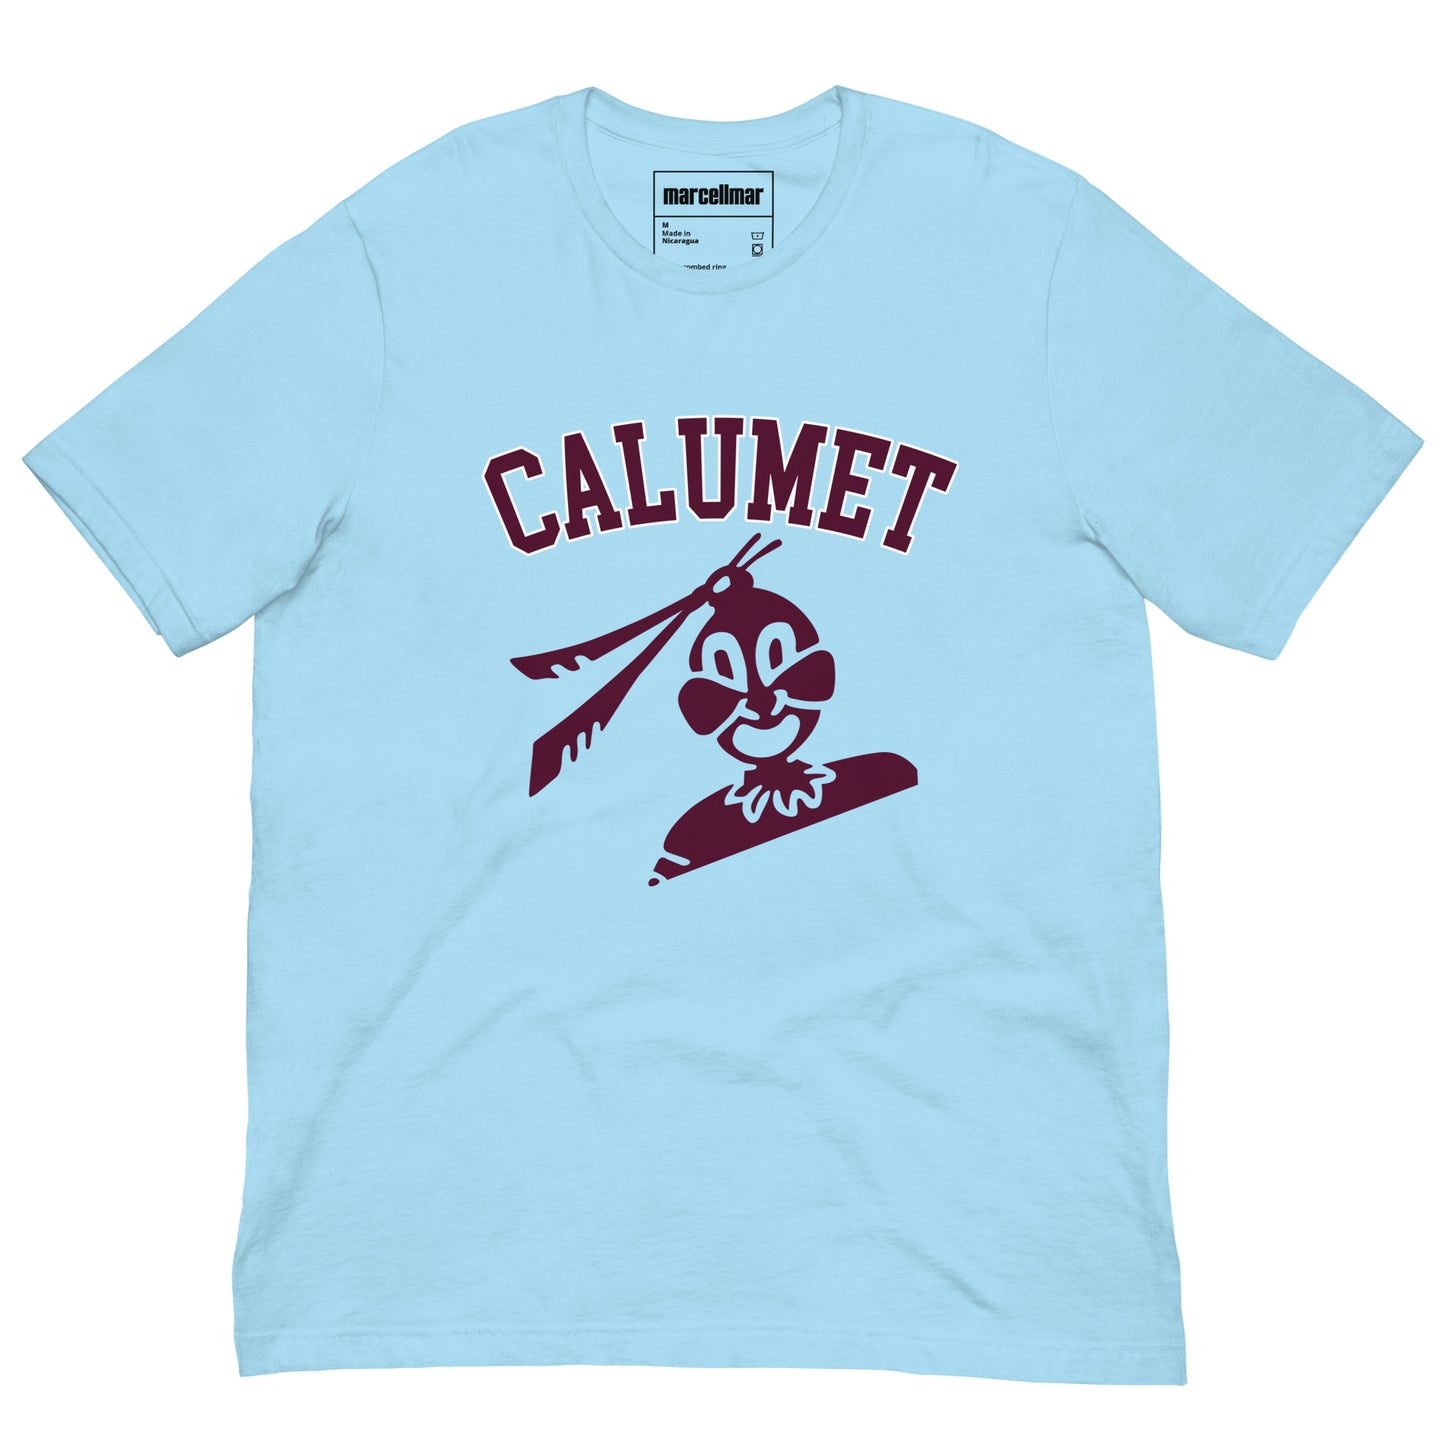 Calumet II Premium T-shirt